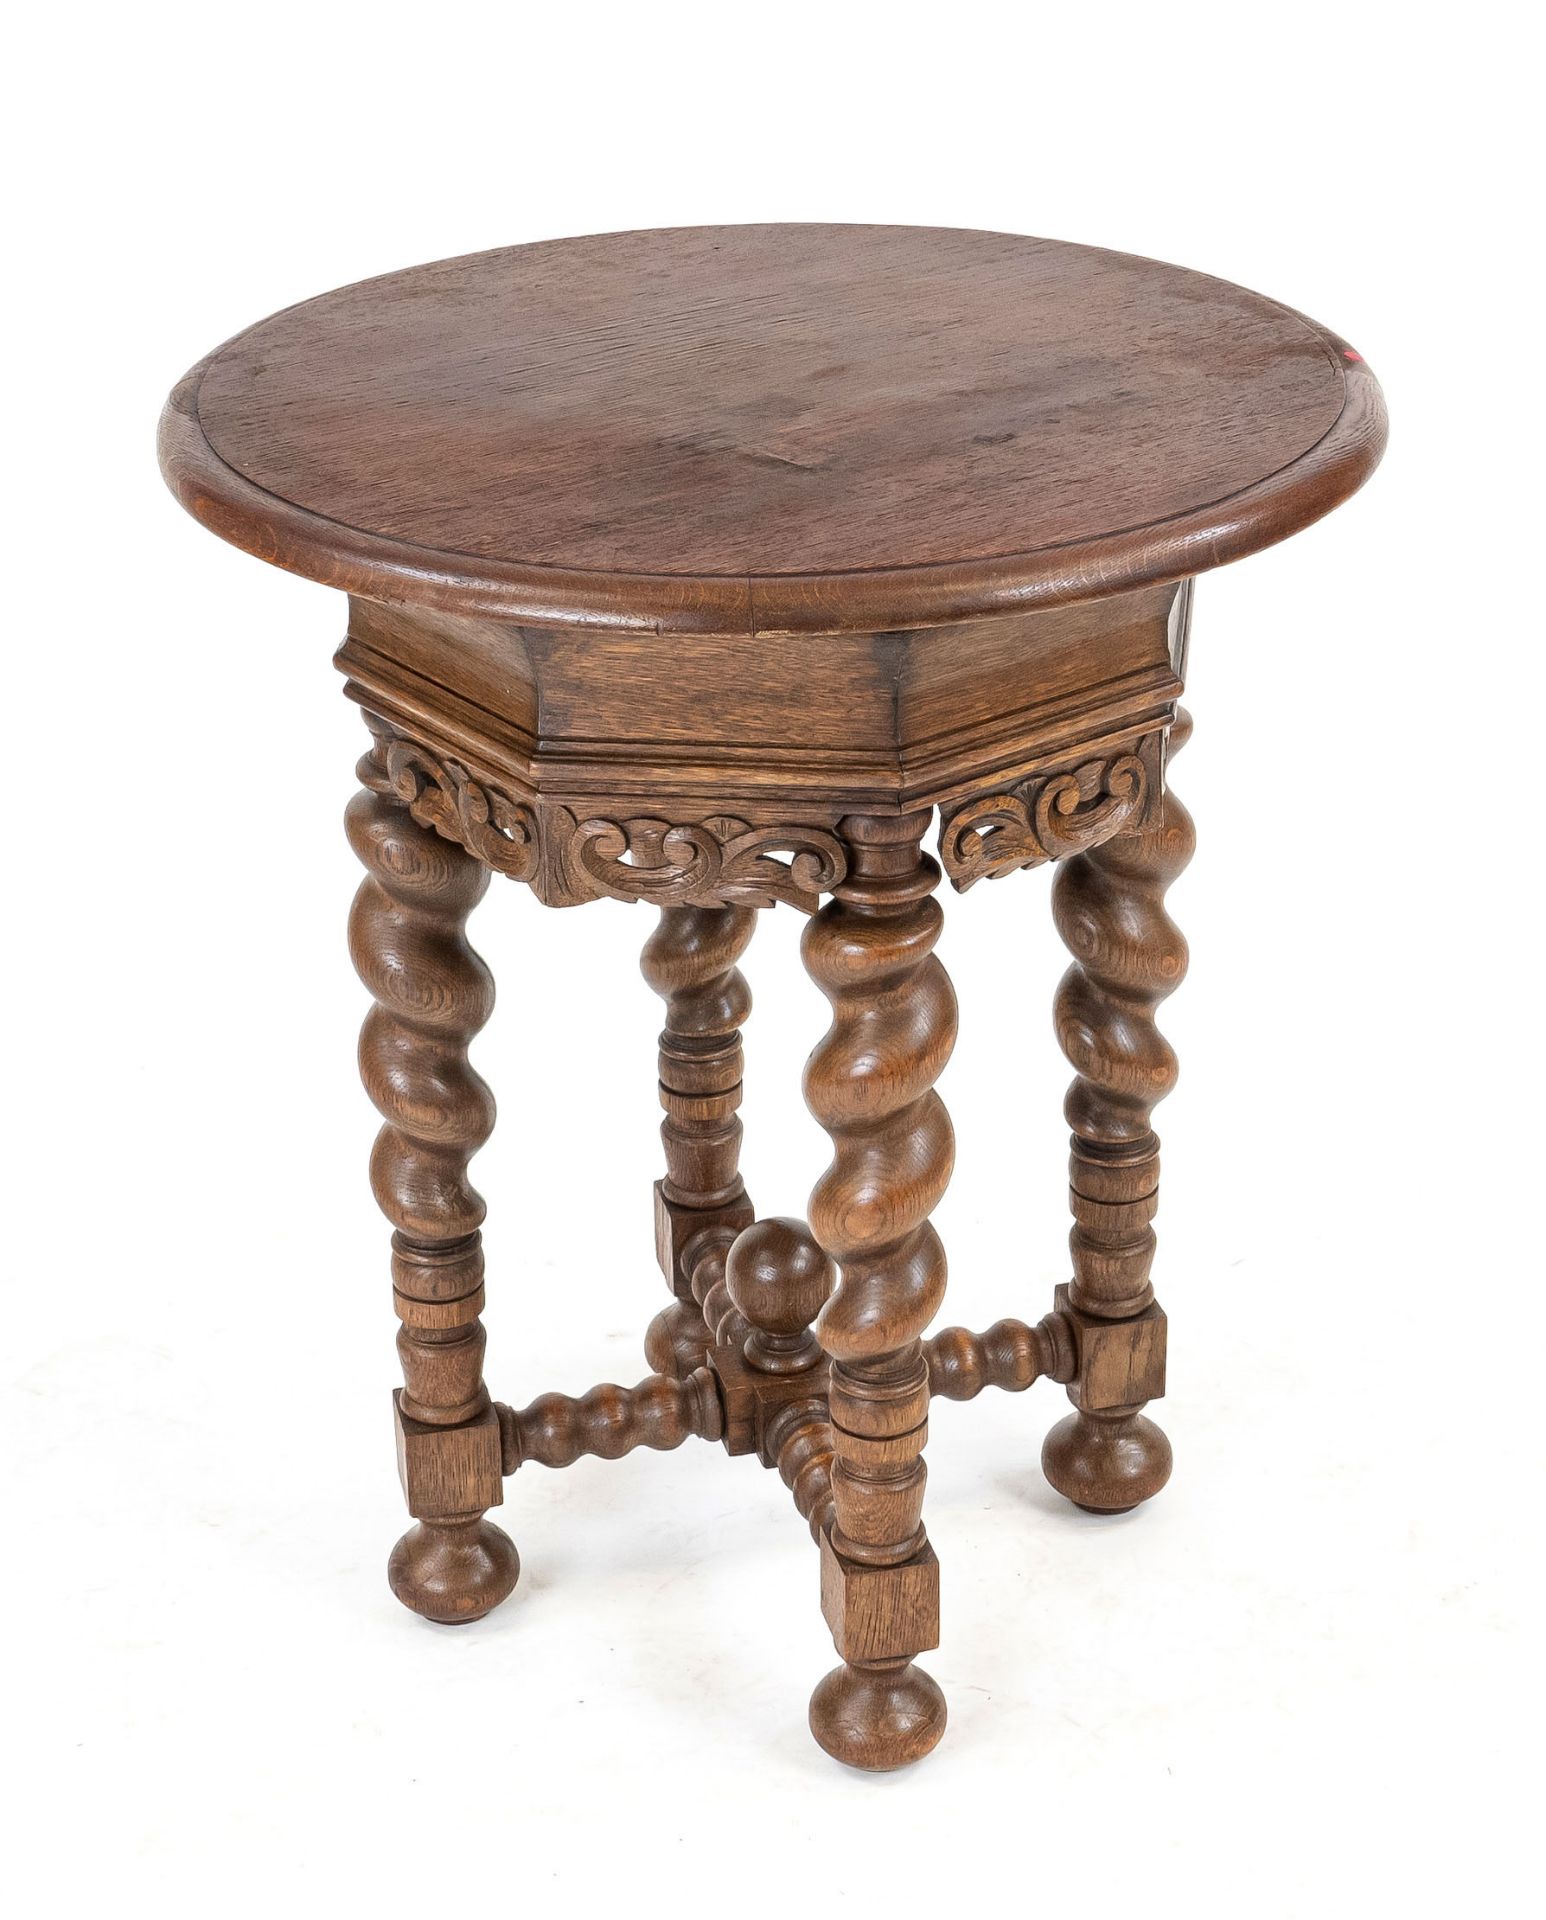 Round side table around 1900, solid oak, h. 70 cm, d. 61 cm